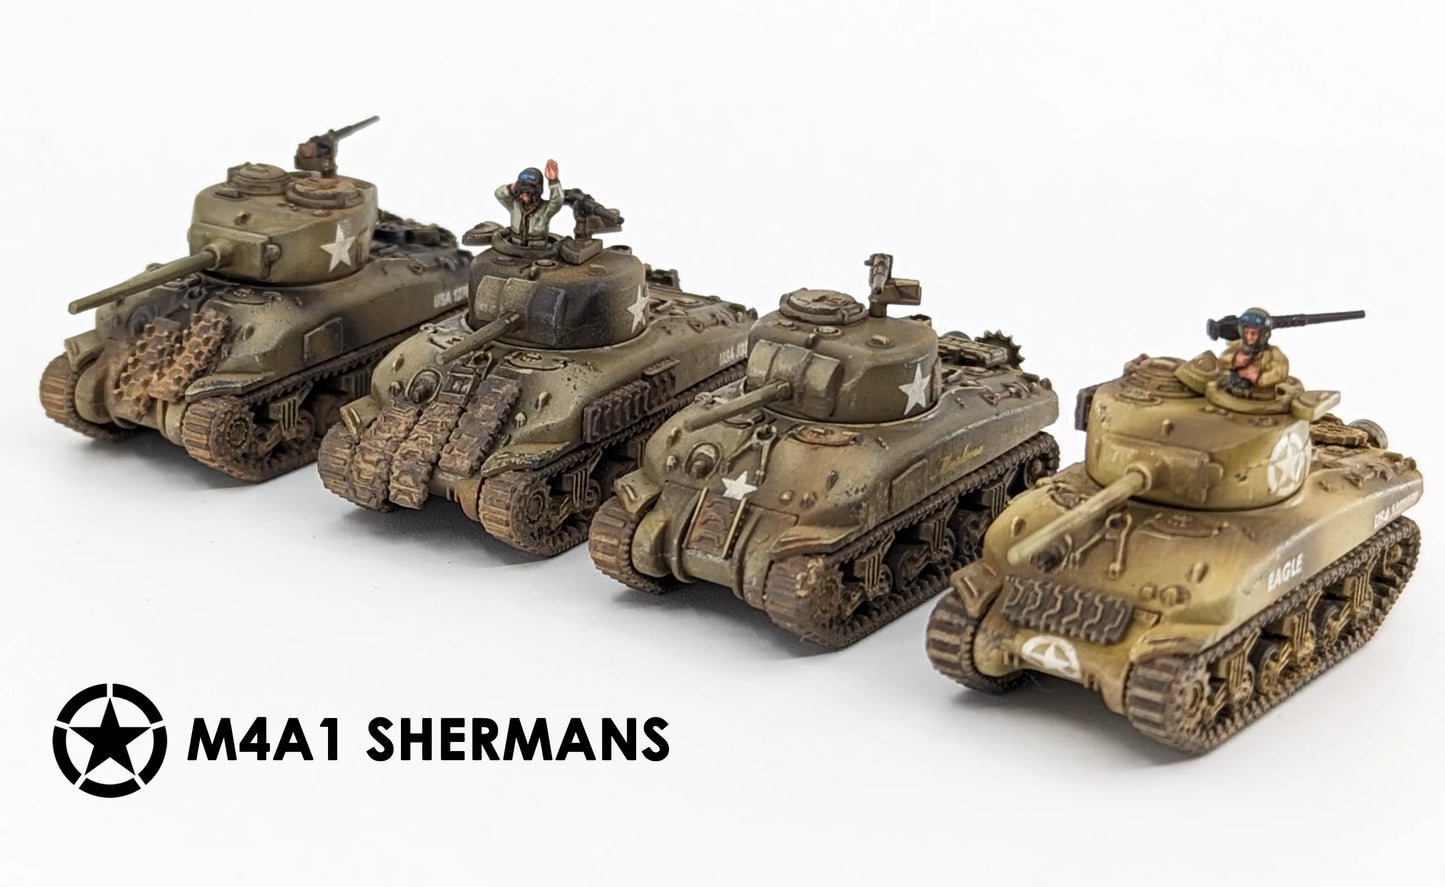 12mm / 144th M4A1 Sherman